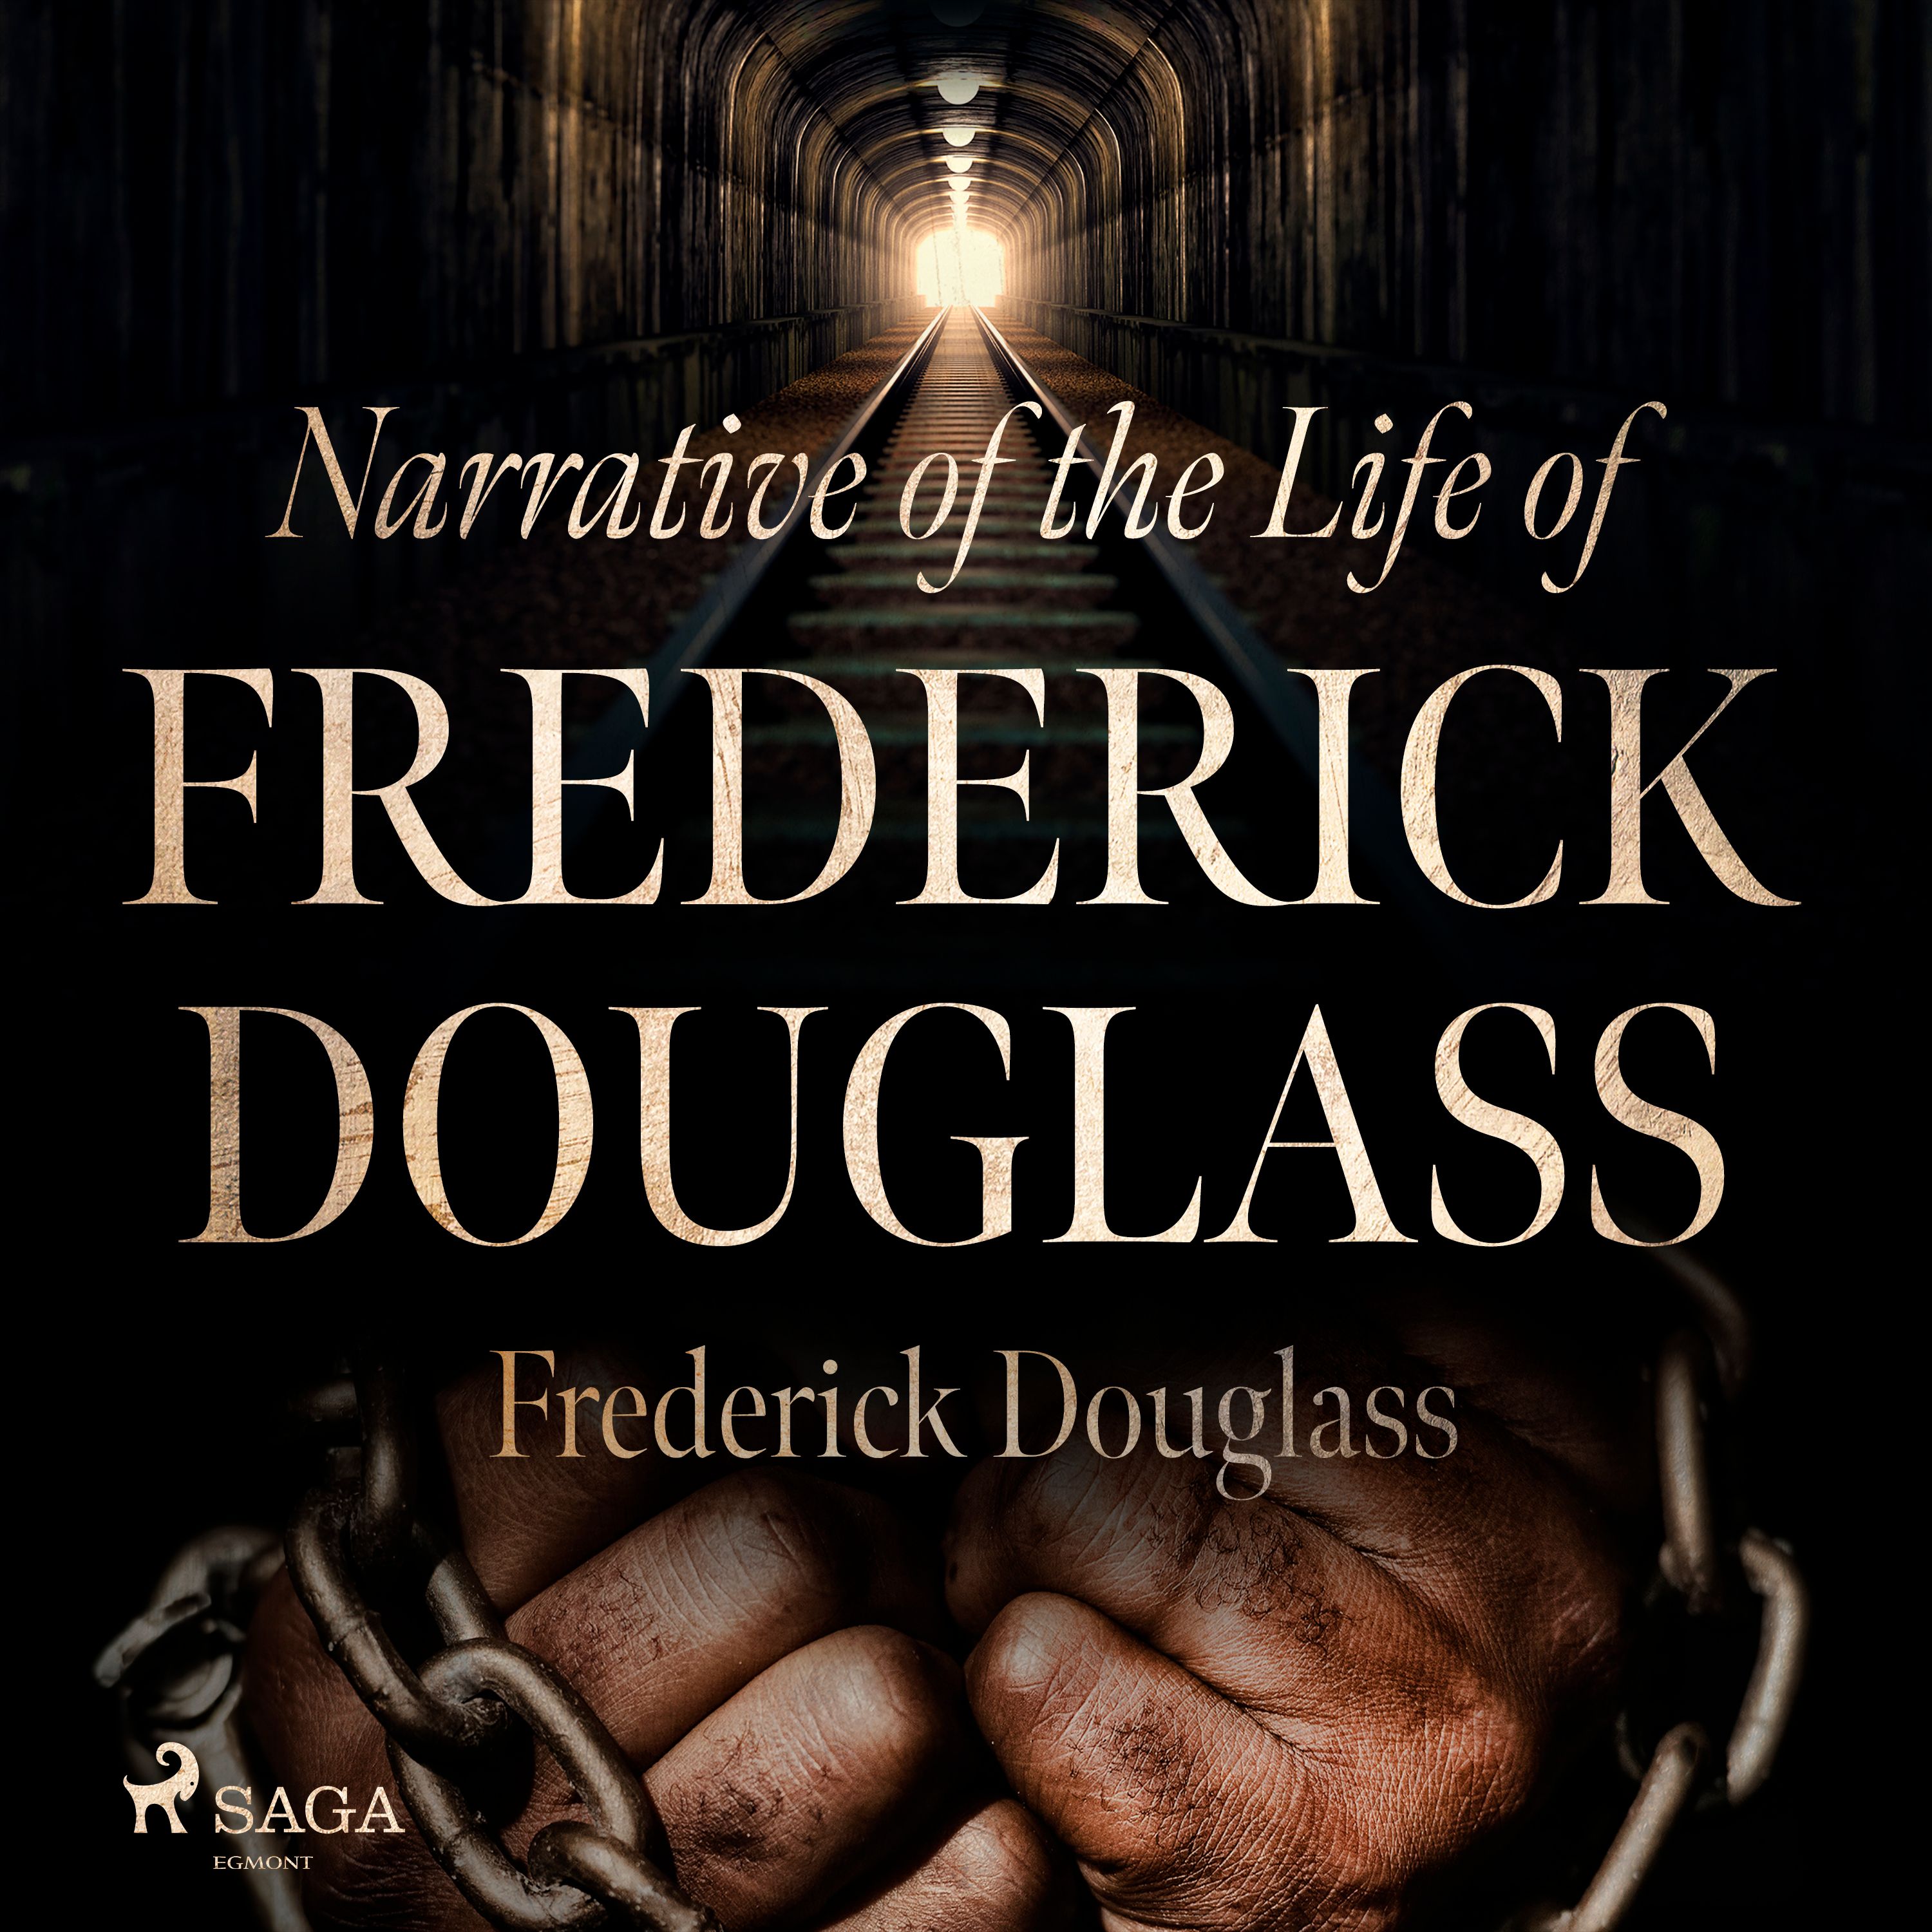 Narrative of the Life of Frederick Douglass, ljudbok av Frederick Douglass